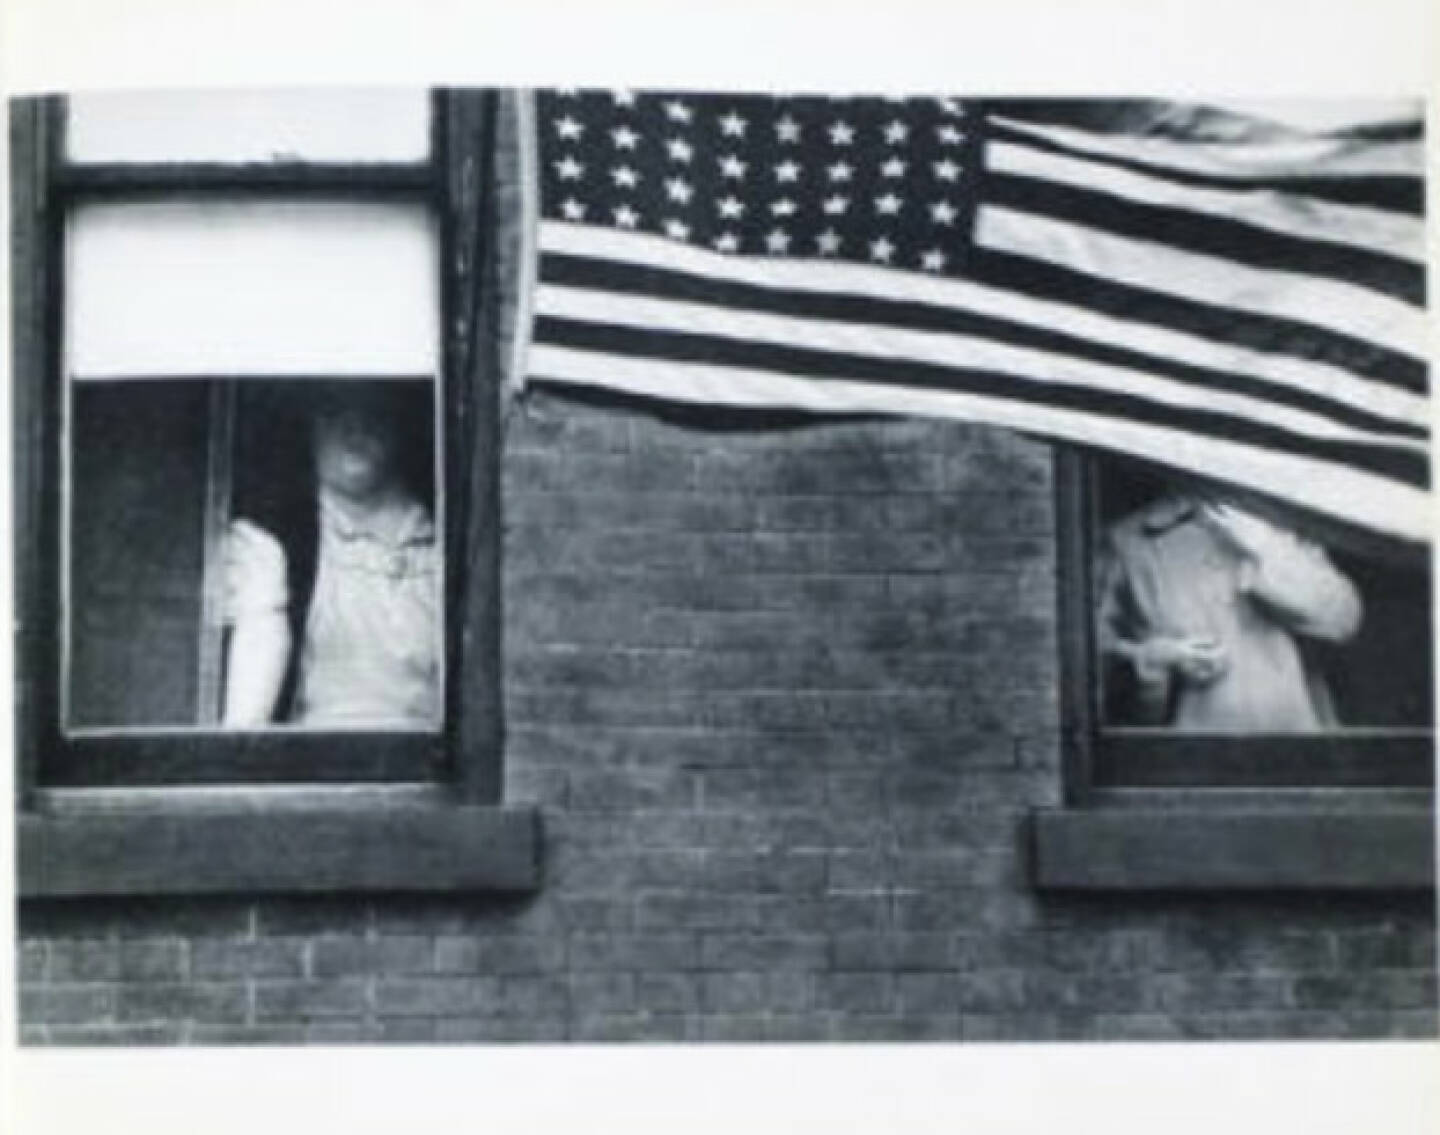 eine Seite aus Robert Frank - The Americans (US Flagge), Preis: 1500-3000 Euro ,http://josefchladek.com/book/robert_frank_-_the_americans